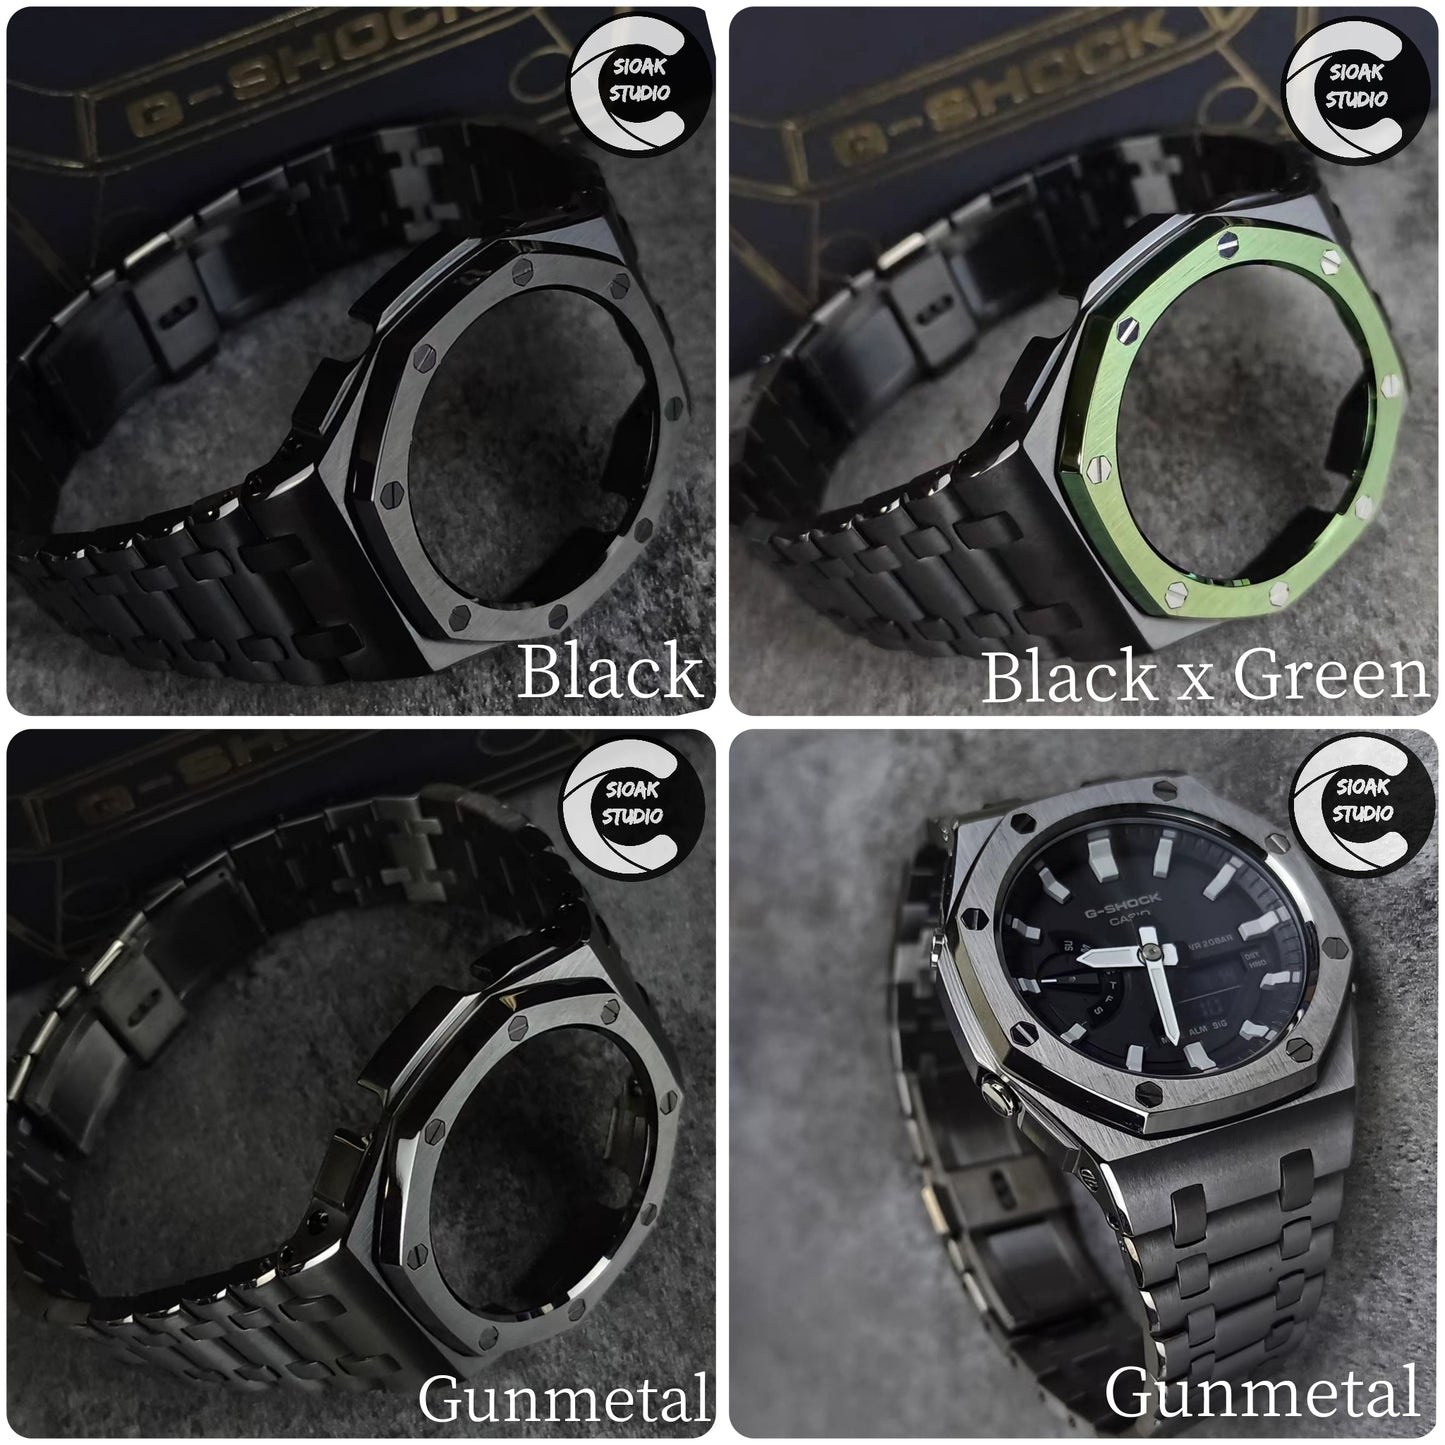 Casioak Mod Watch Offshore Superior Black Case Metal Strap Black Orange Time Mark Black Dial 44mm - Casioak Studio